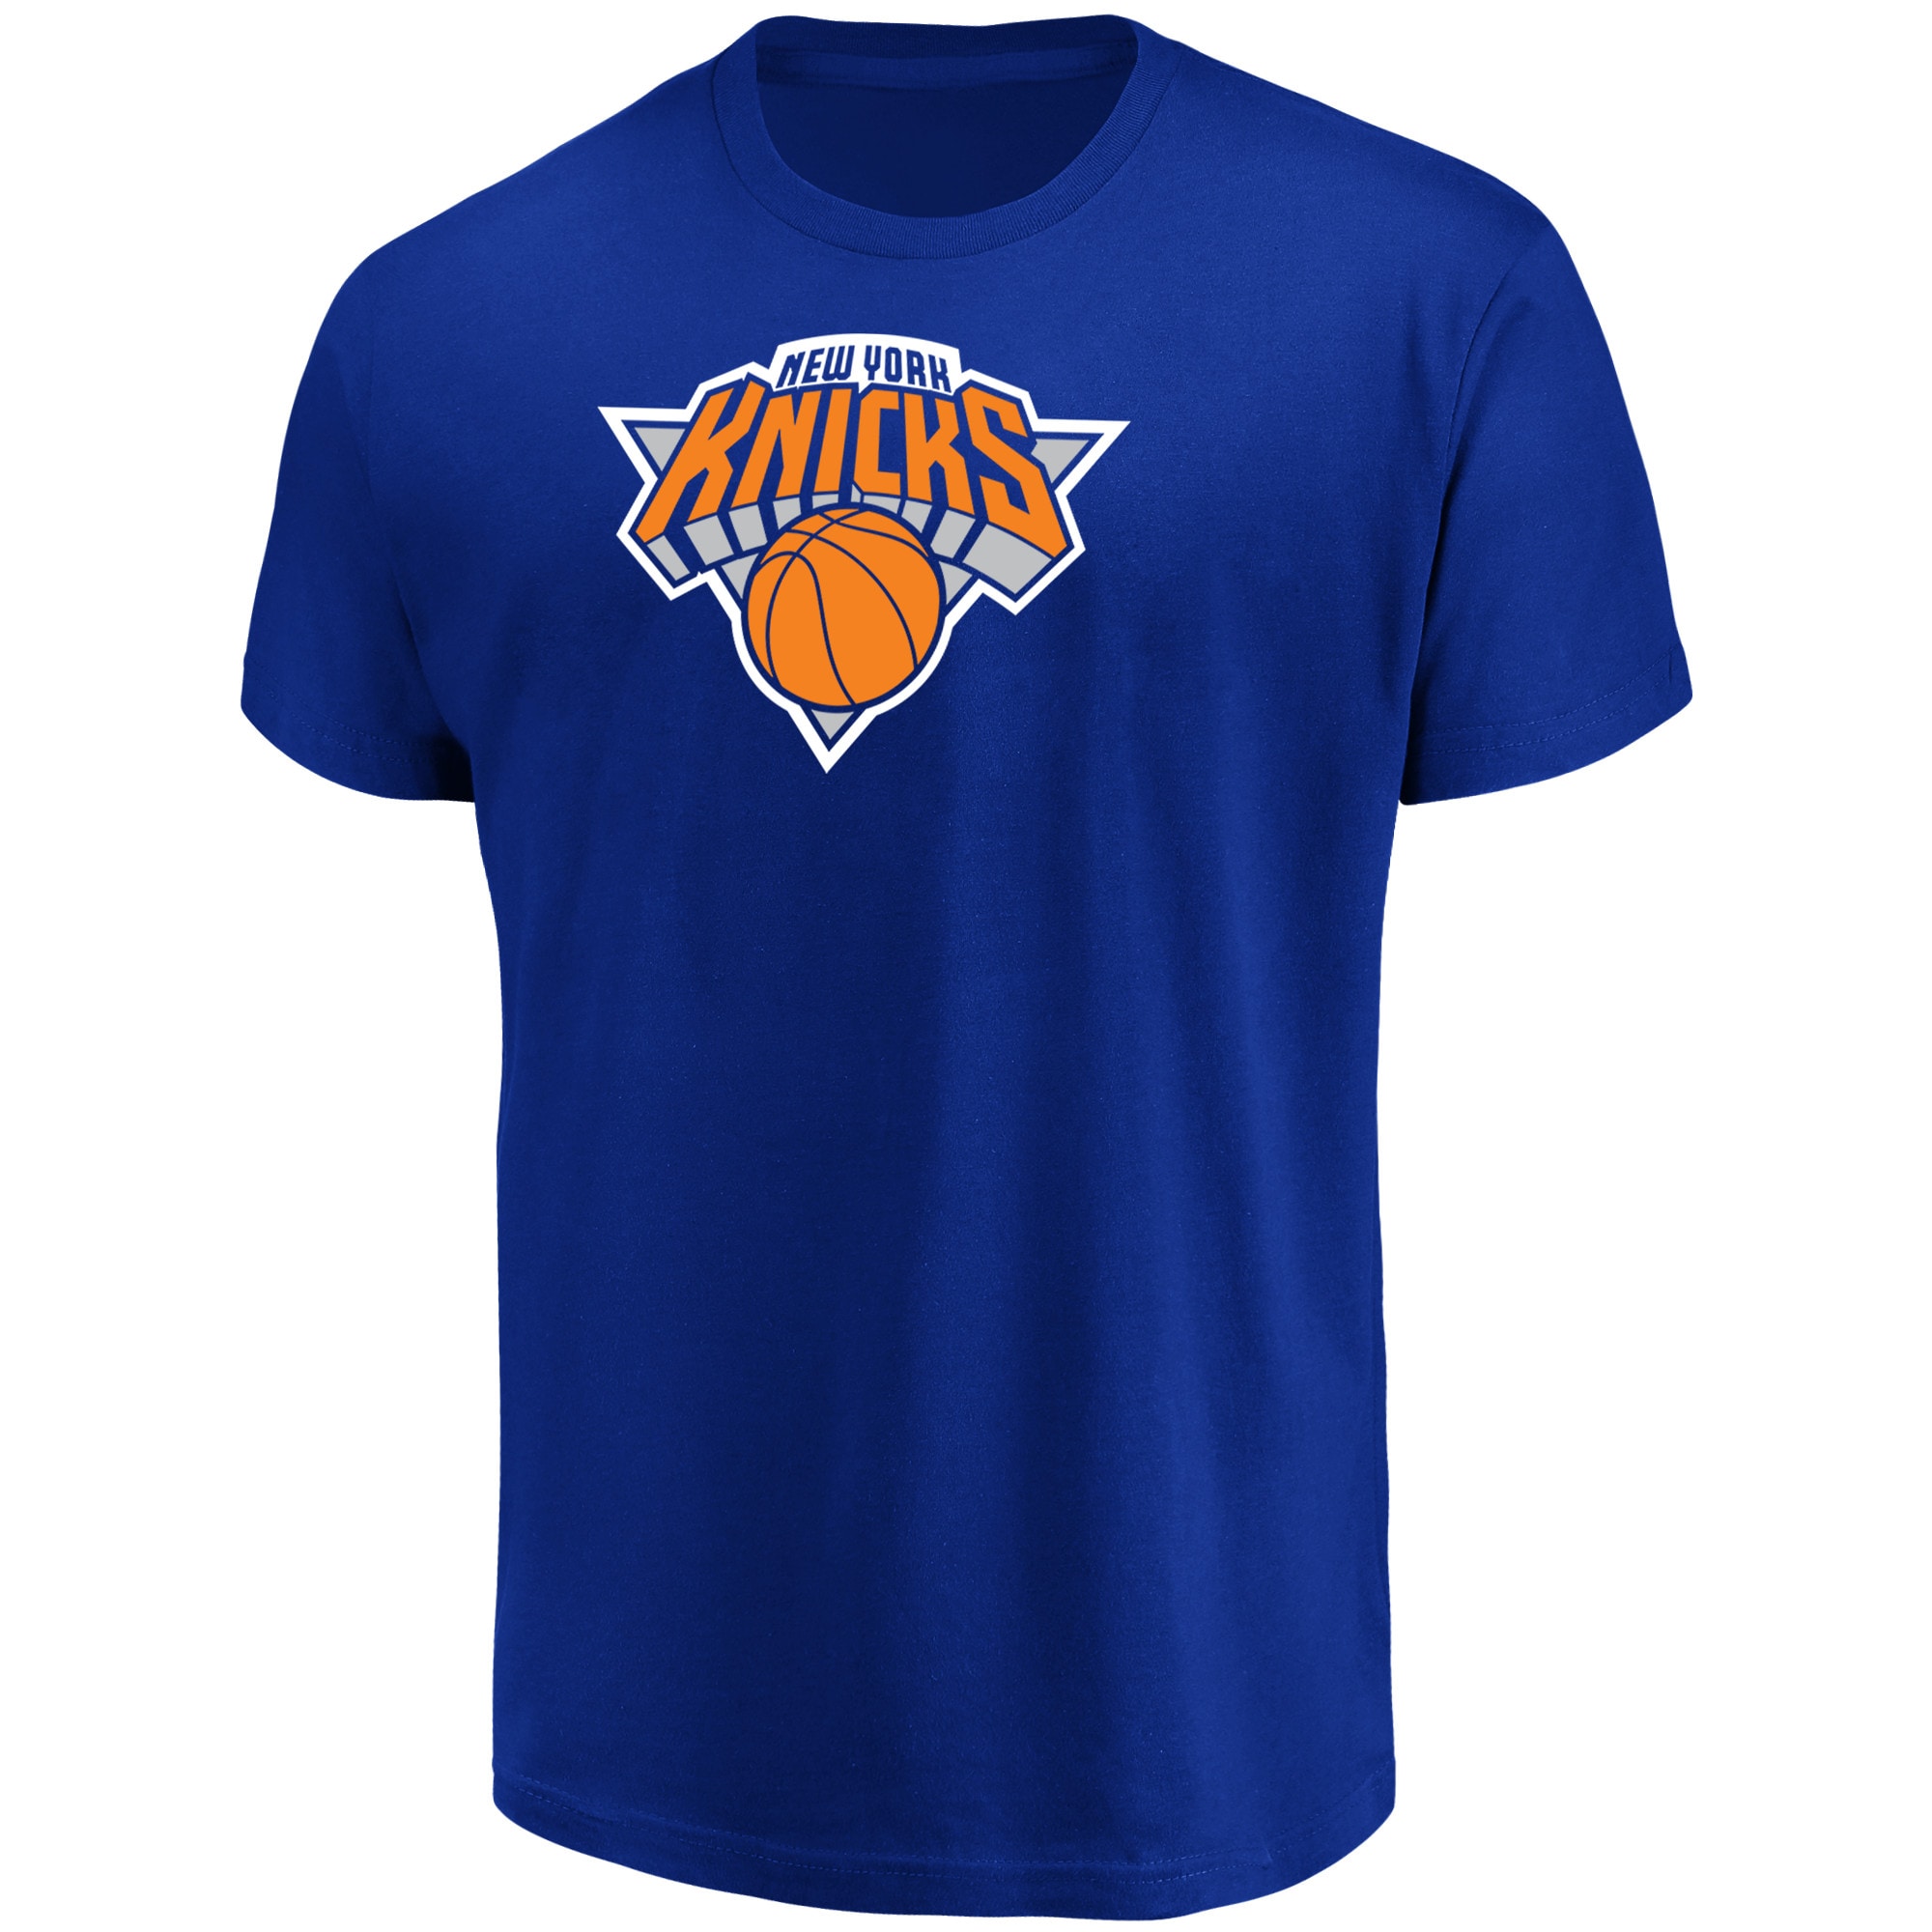 Men's Majestic Blue New York Knicks Victory Century T-Shirt - image 2 of 3